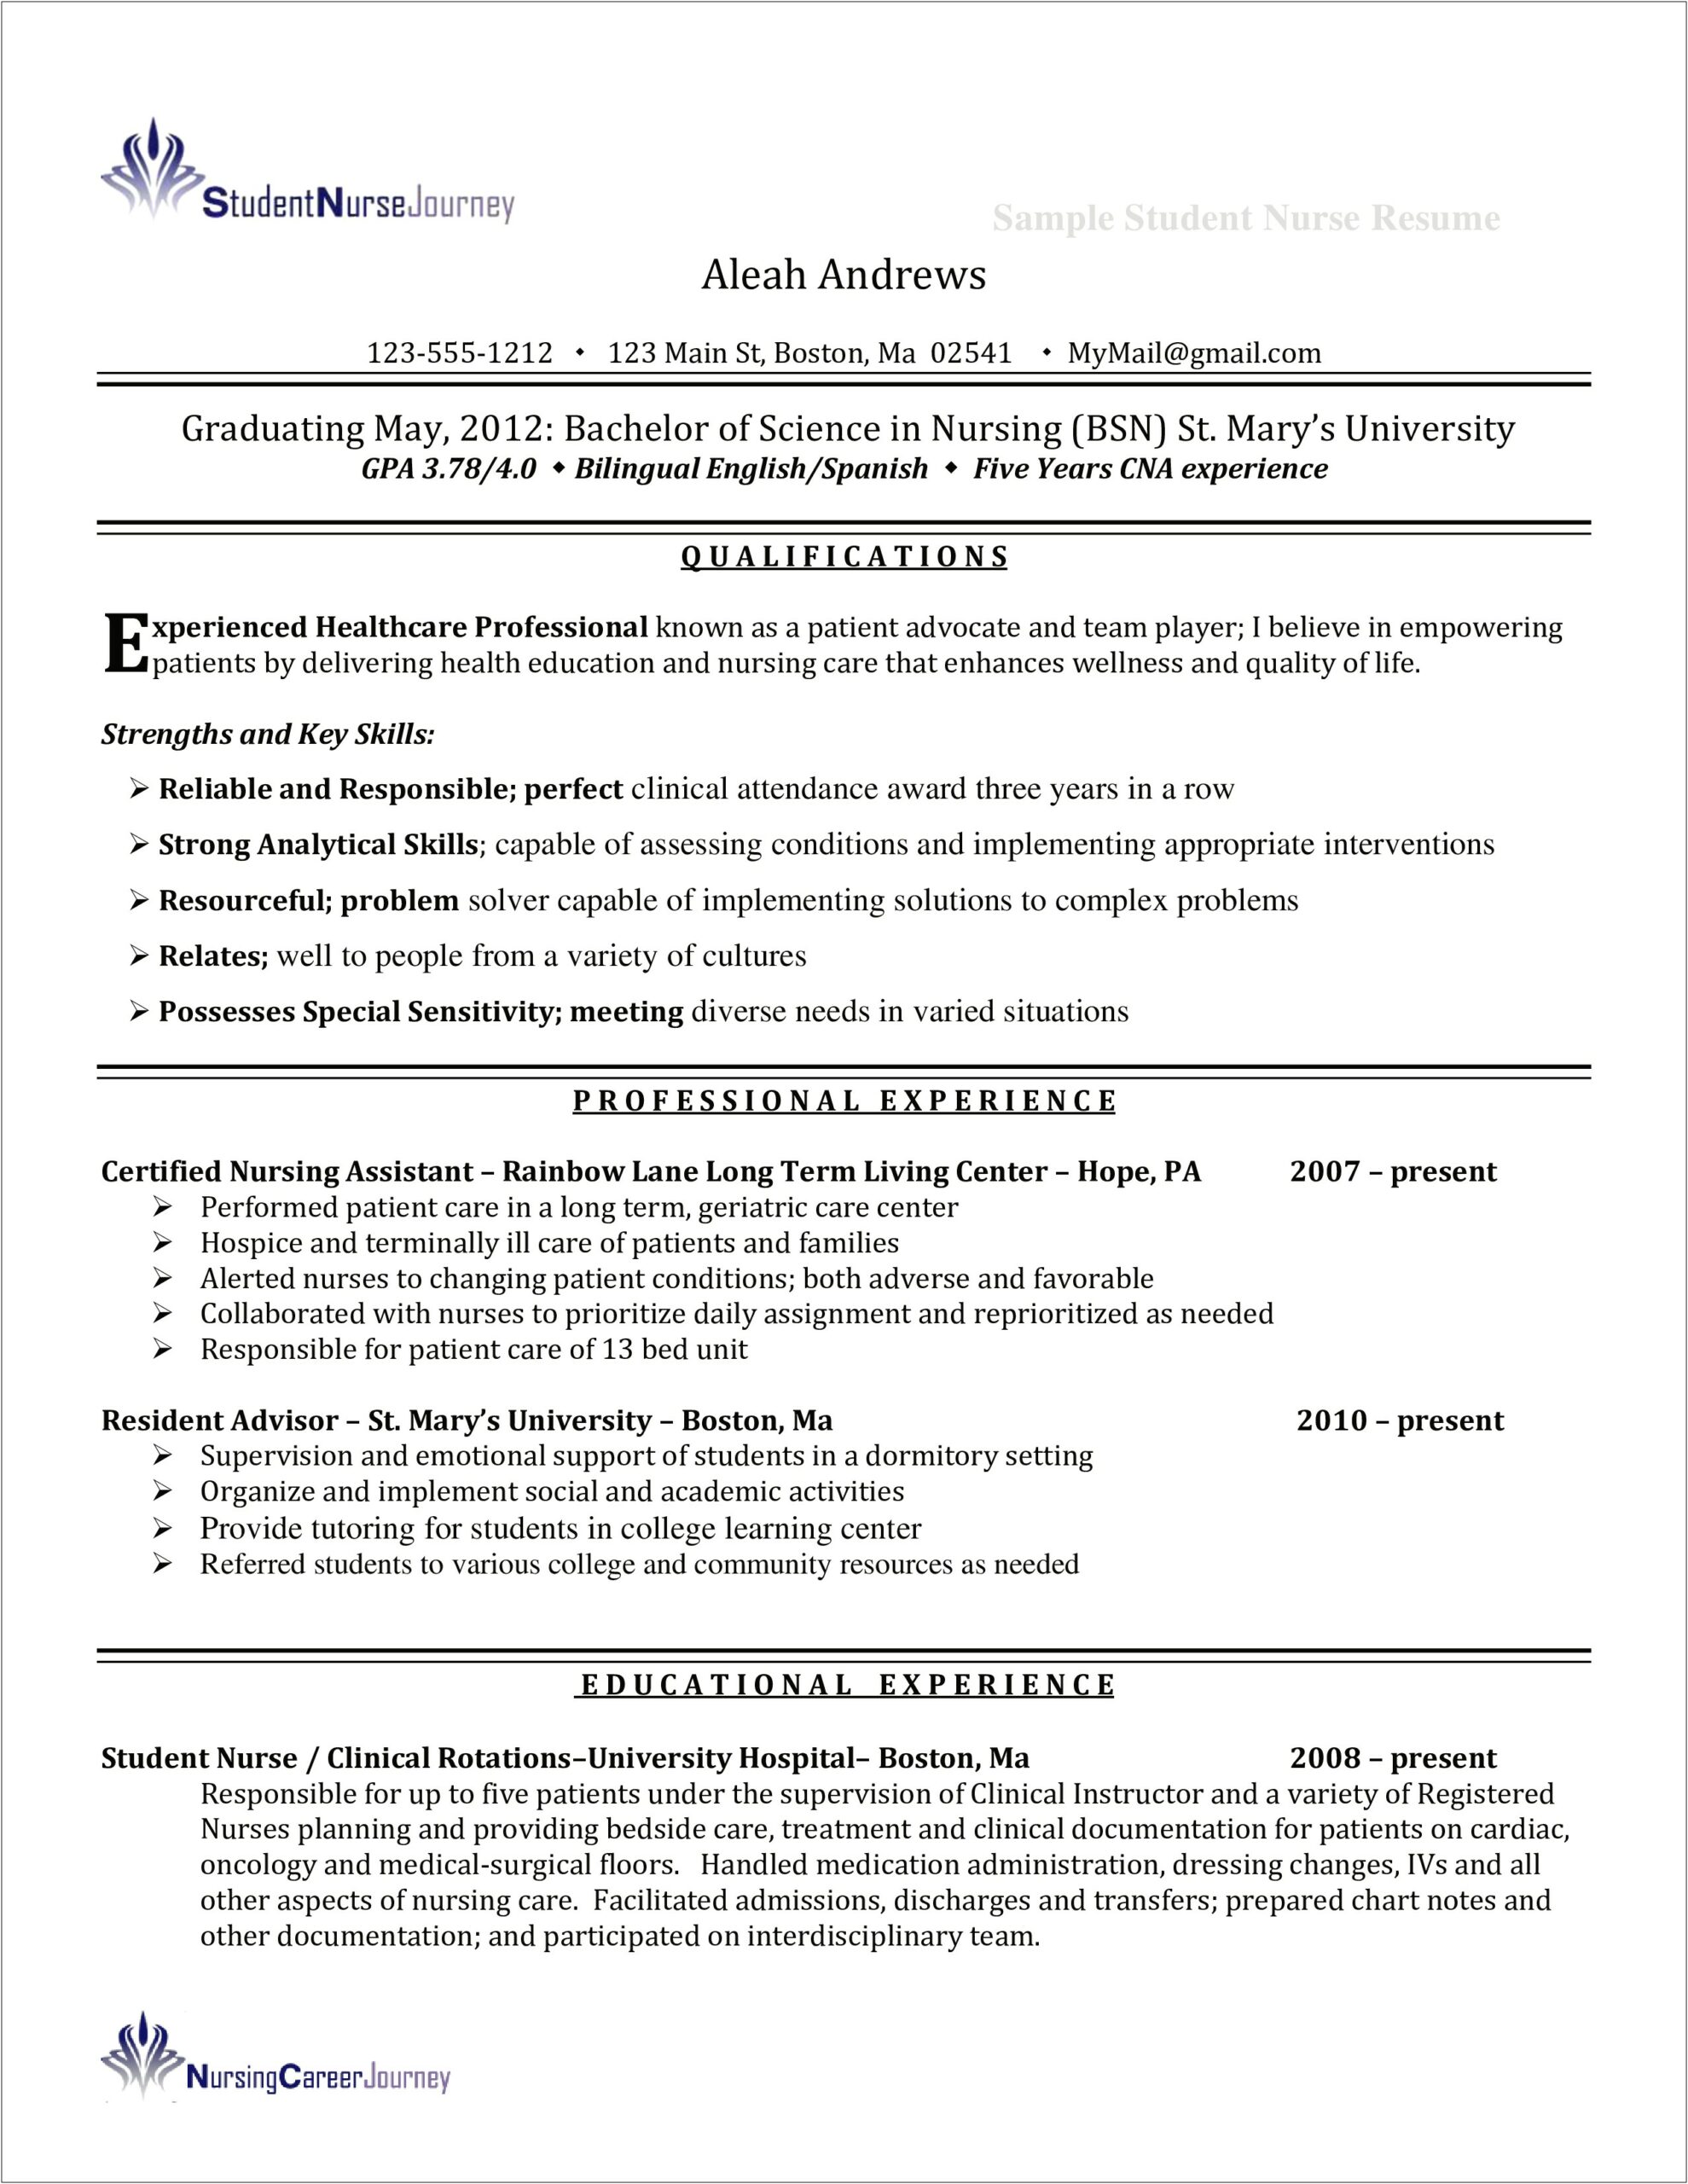 Student Assistant Sample Resume Download